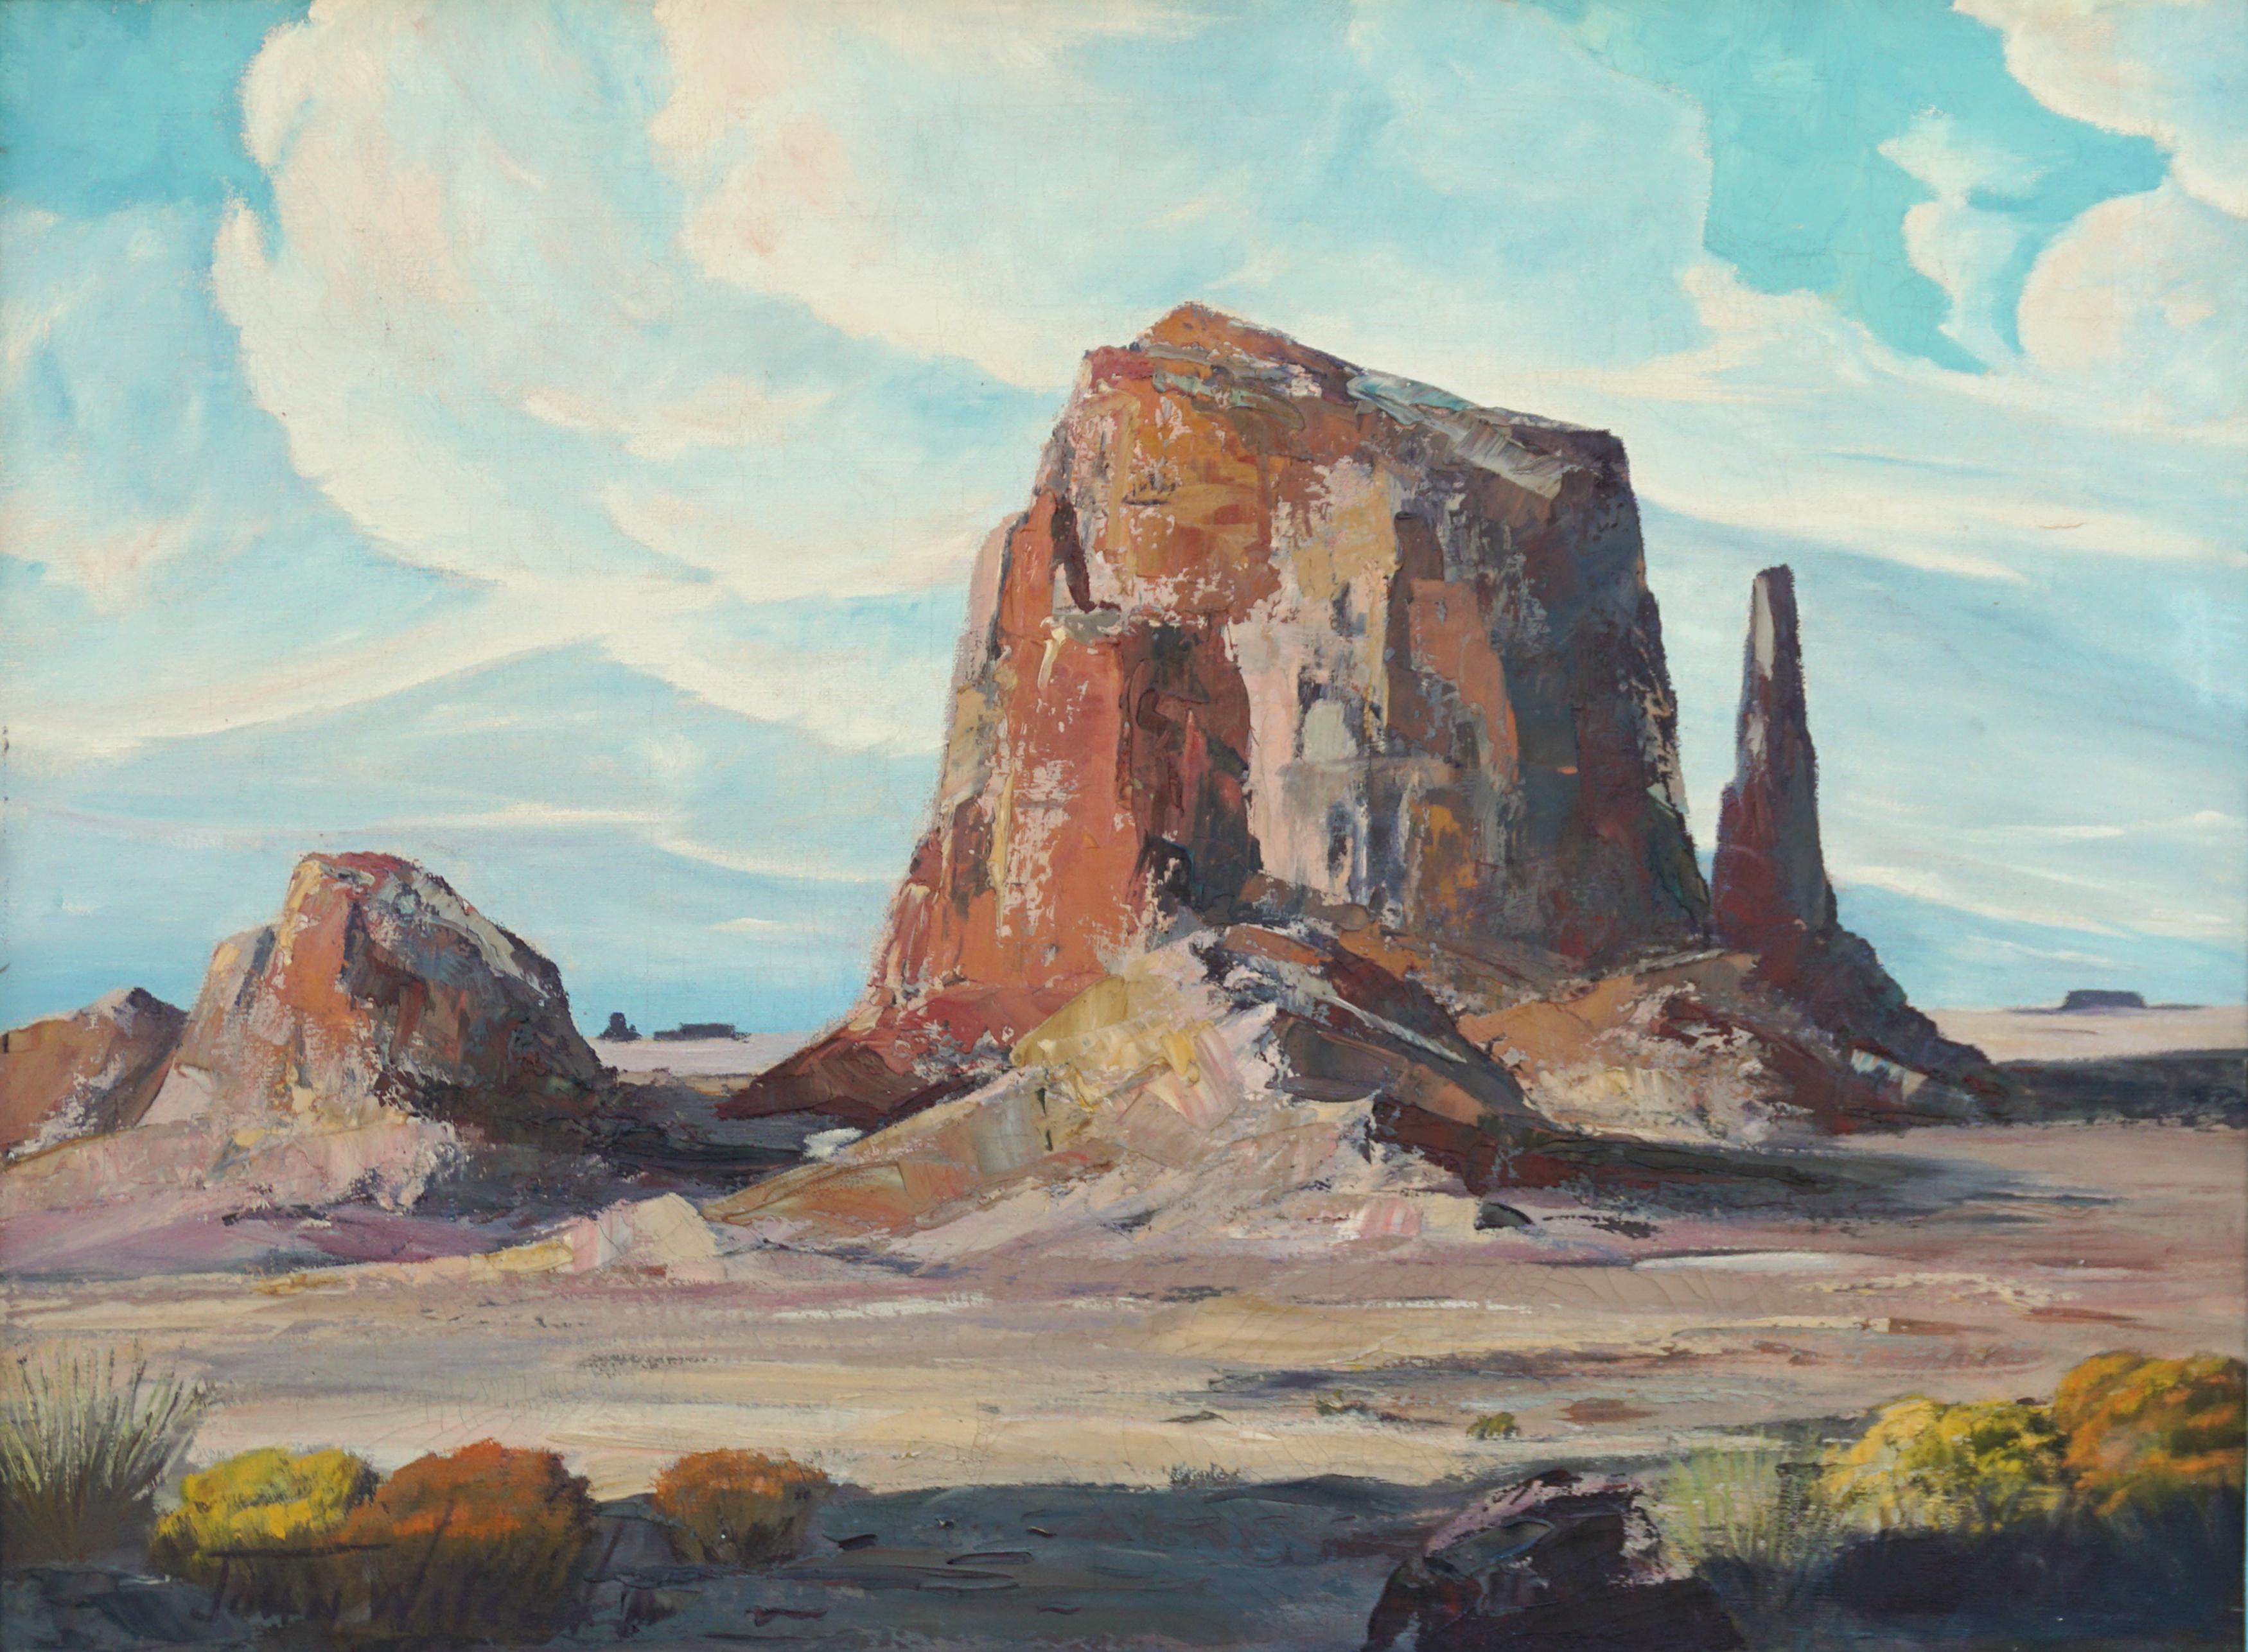 Sherman Rocks - Mid Century Utah Desert Rock Formation Landscape, 1940s - Painting by John W. Wilcox 